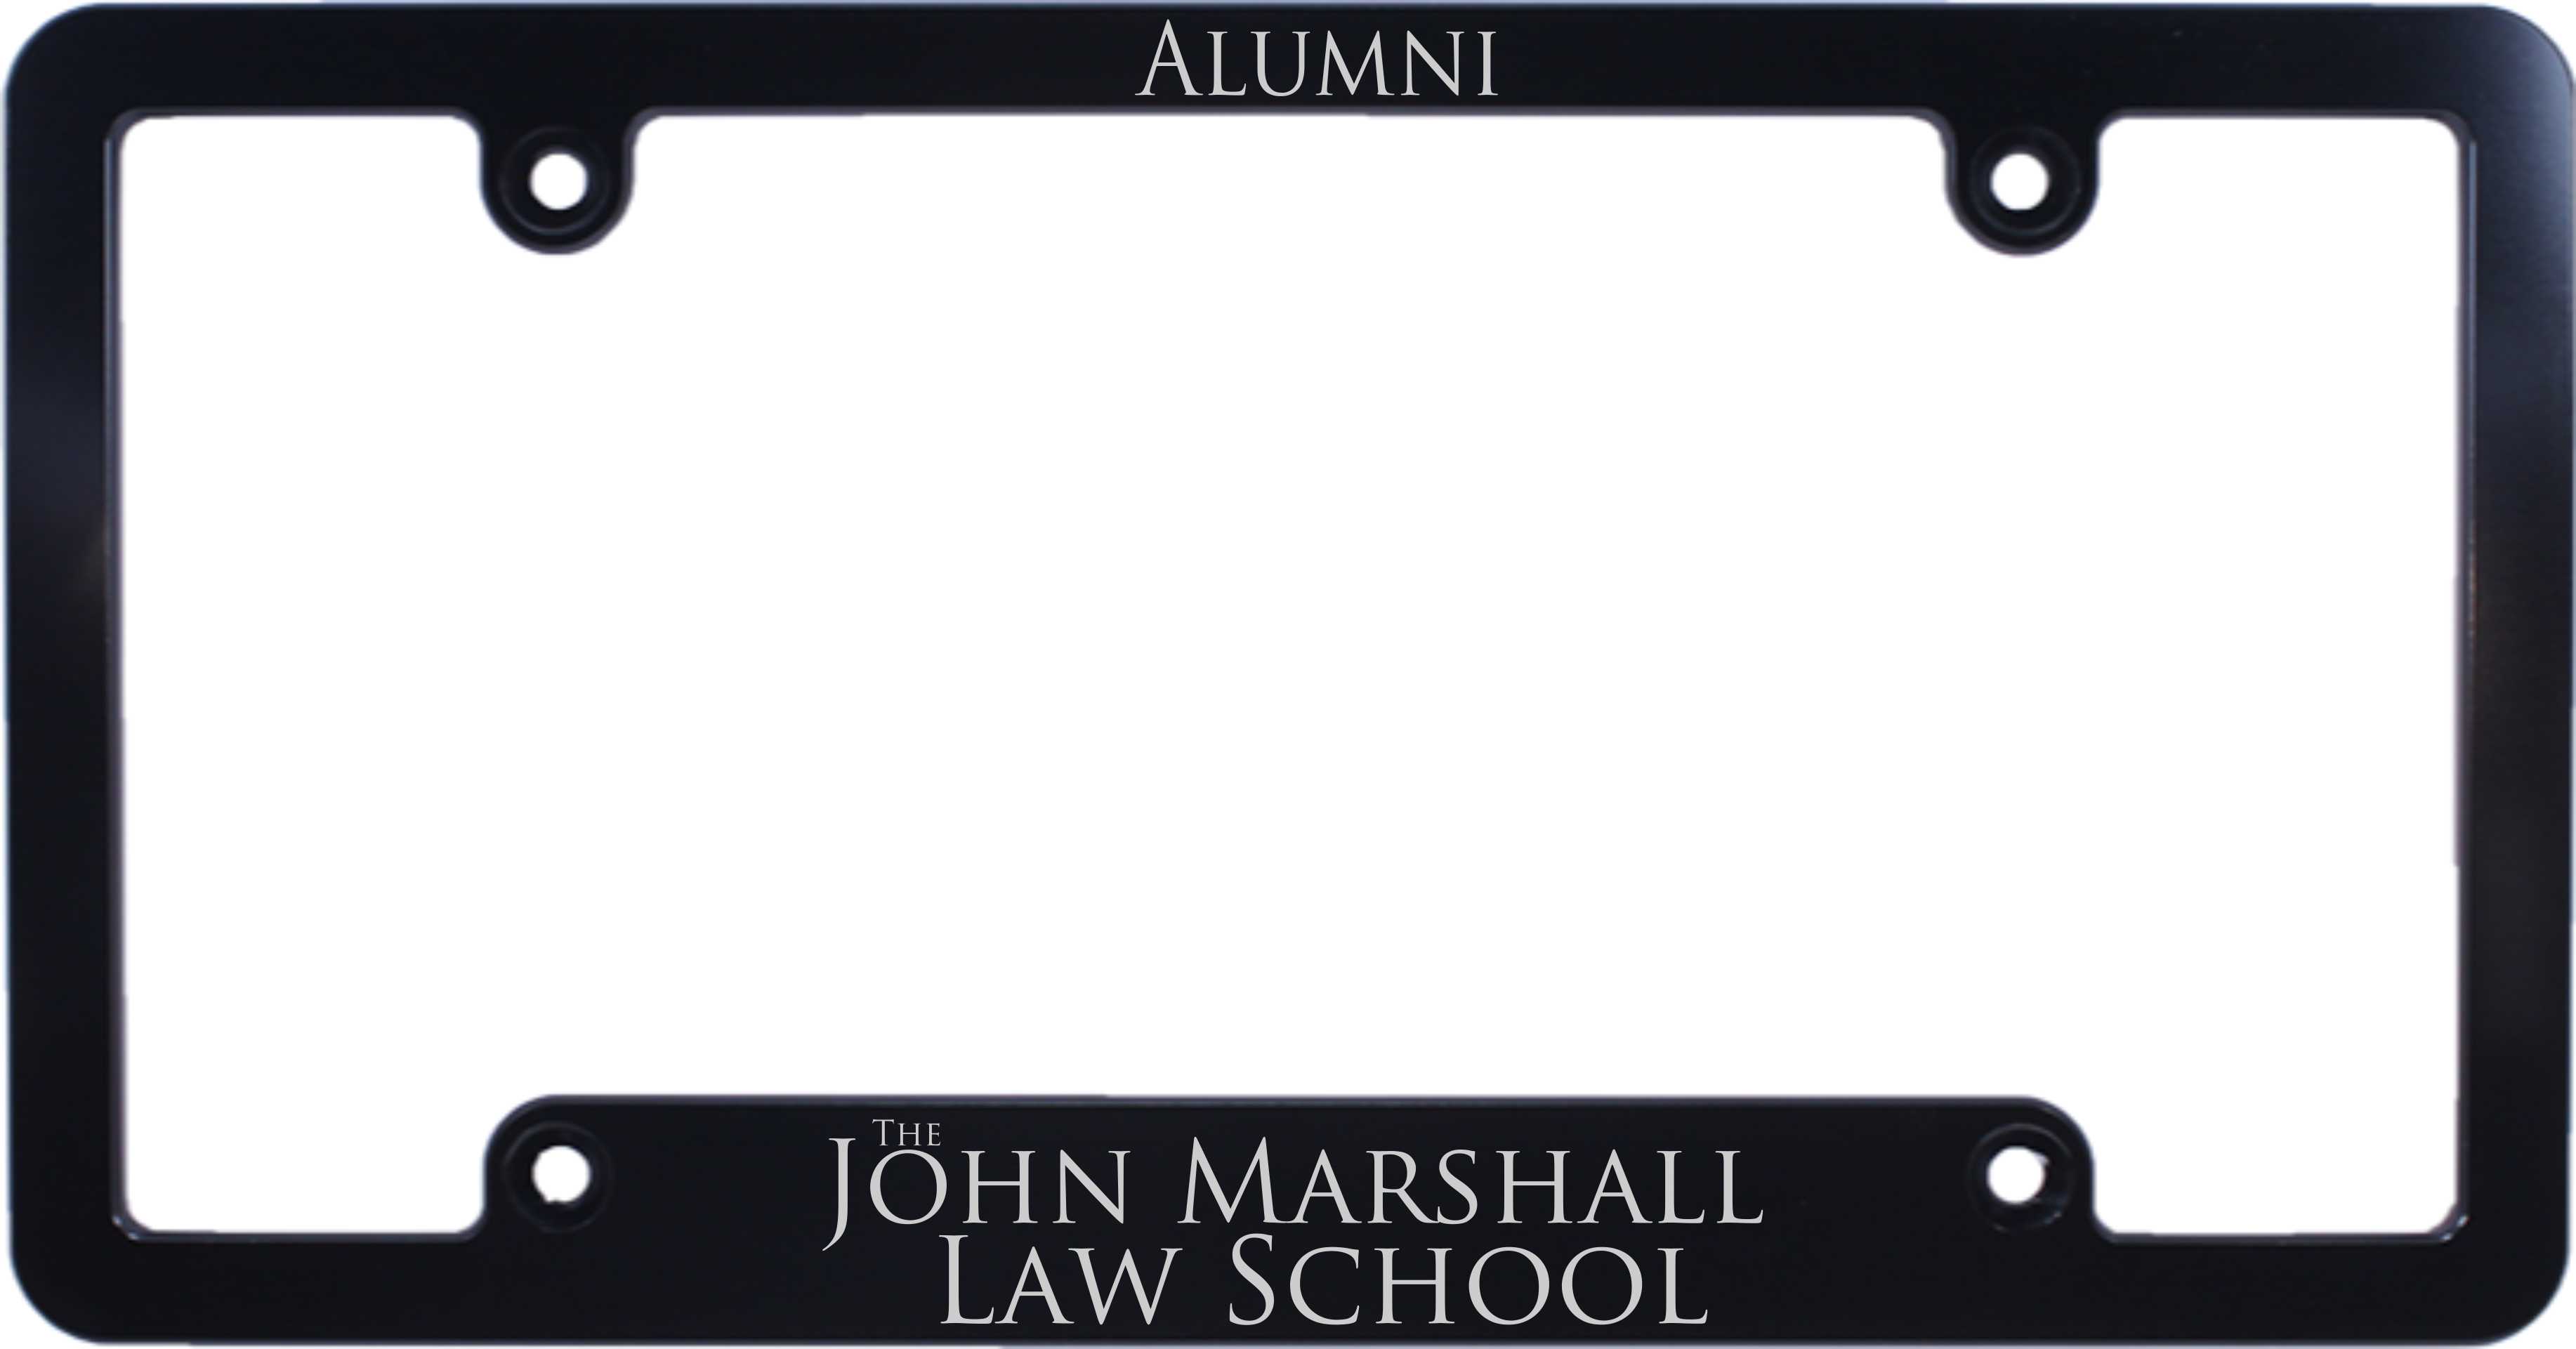 John Marshall Law School